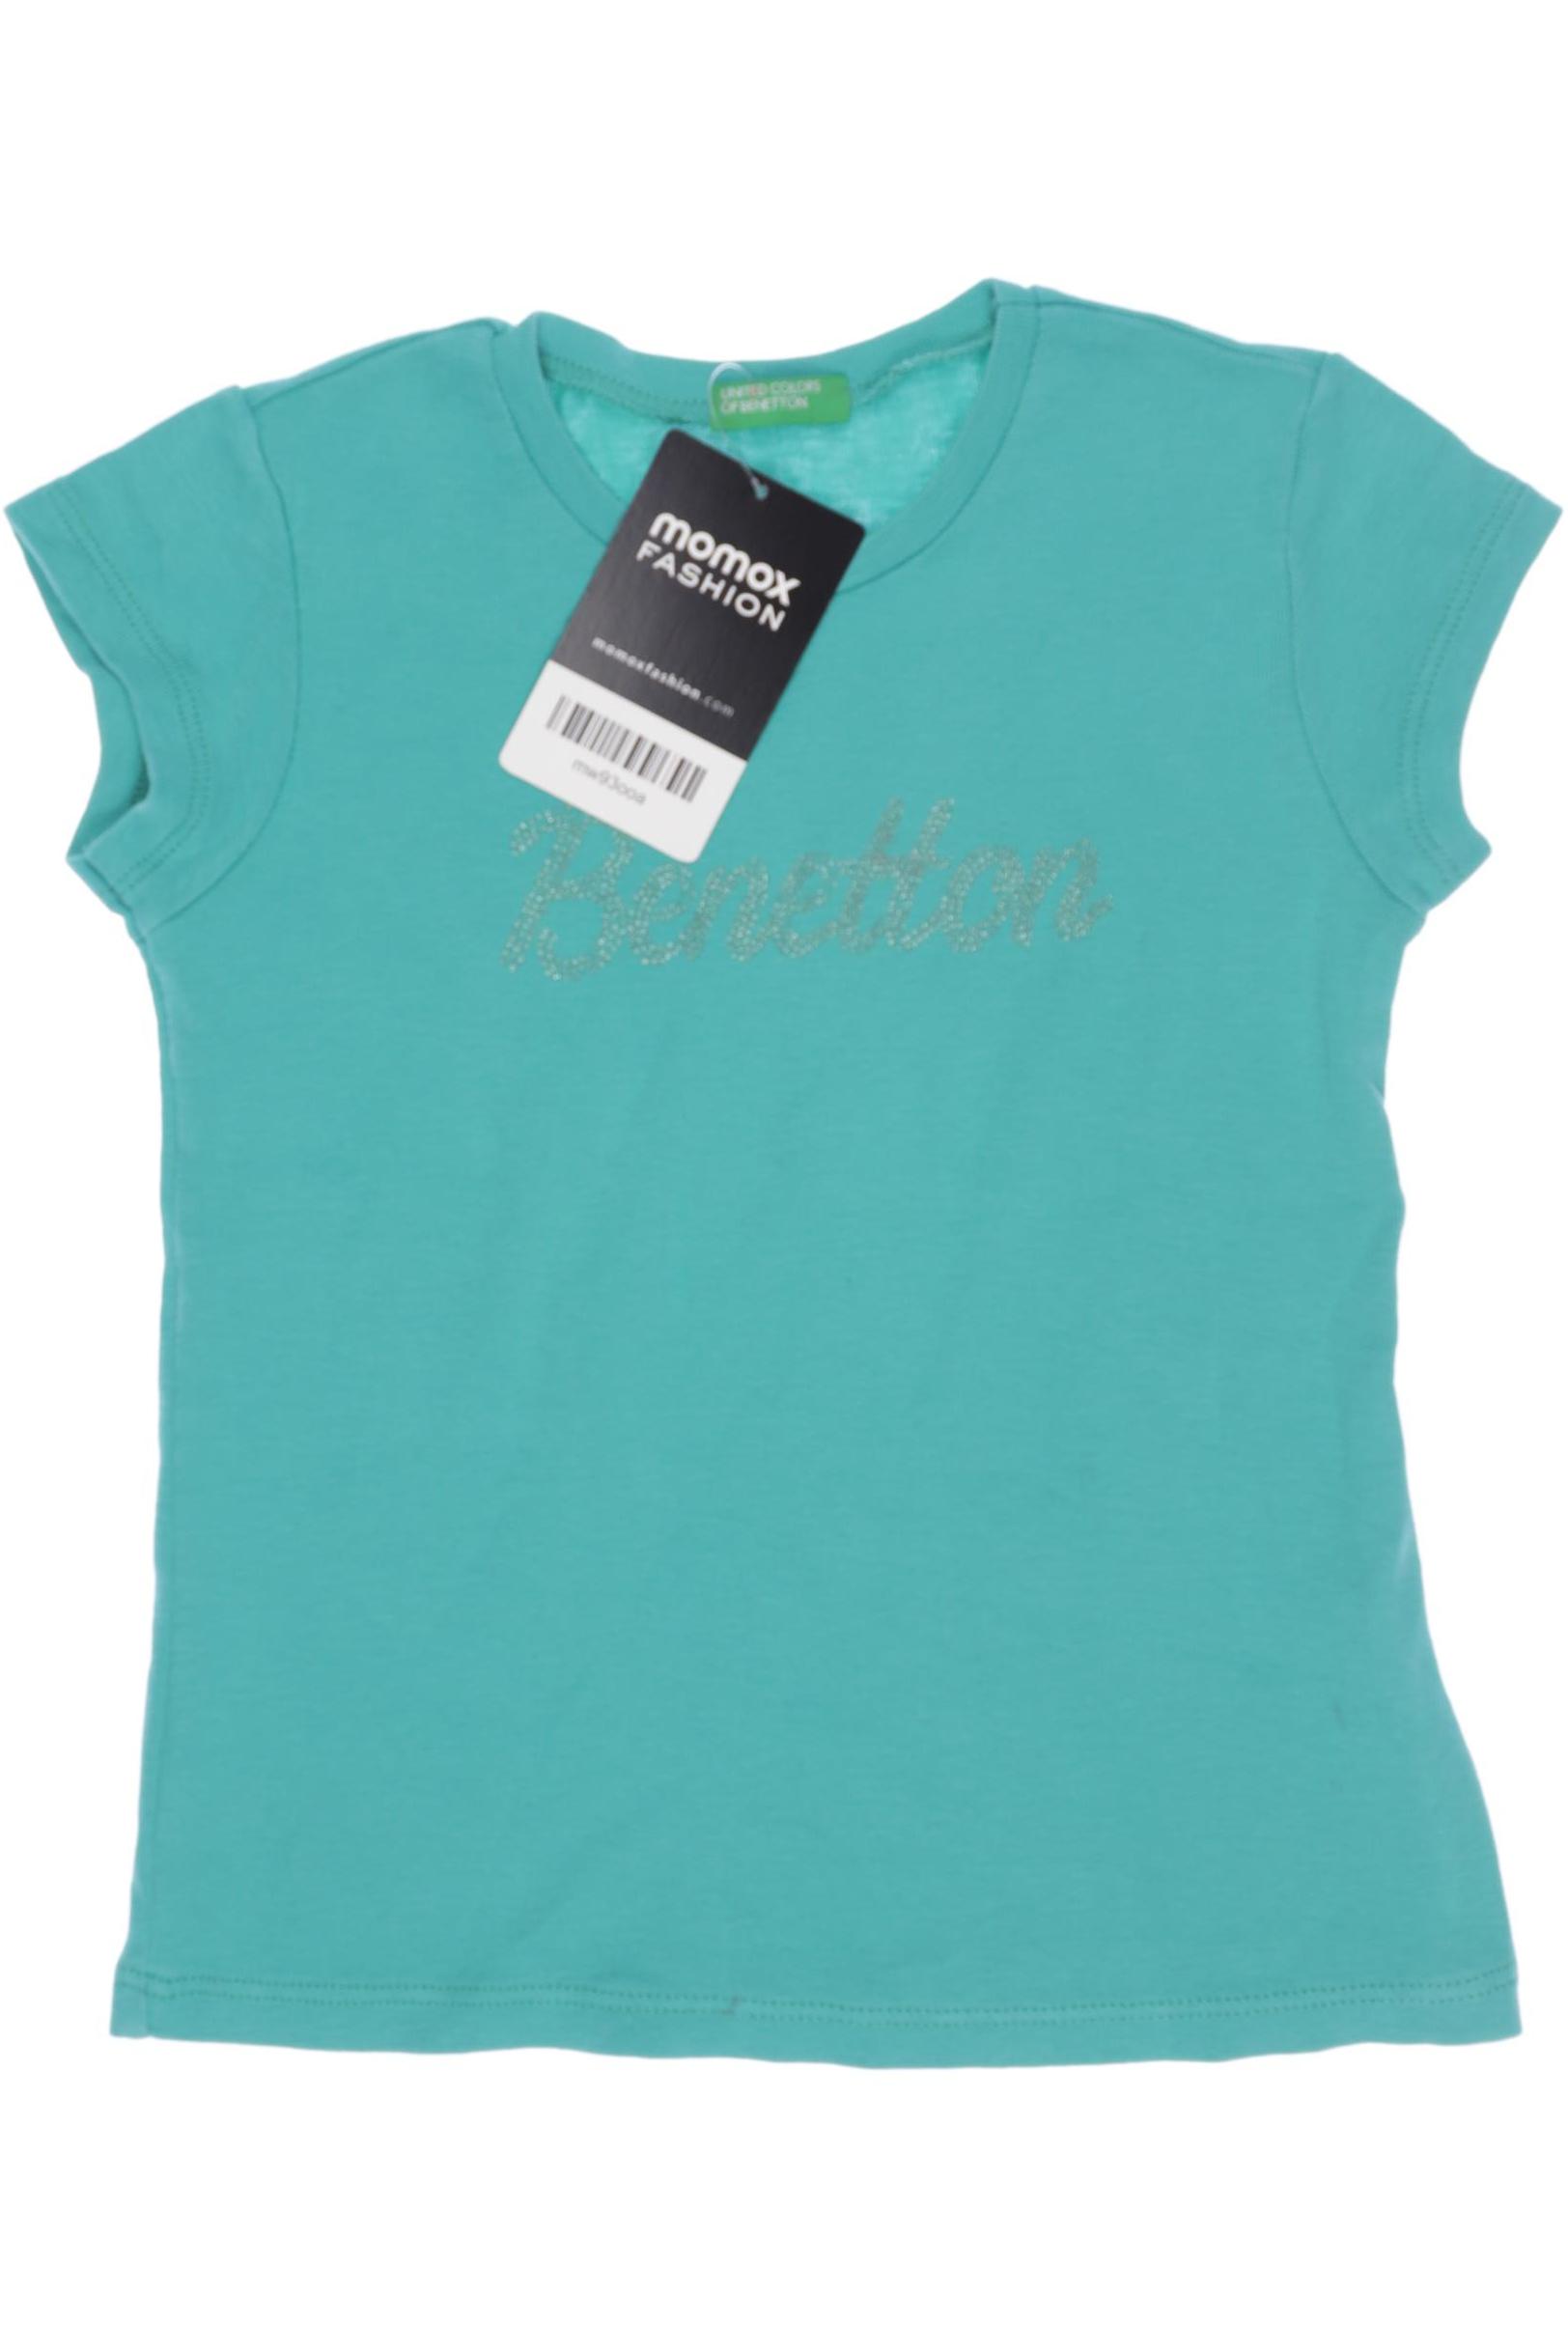 UNITED COLORS OF BENETTON Mädchen T-Shirt, türkis von United Colors of Benetton